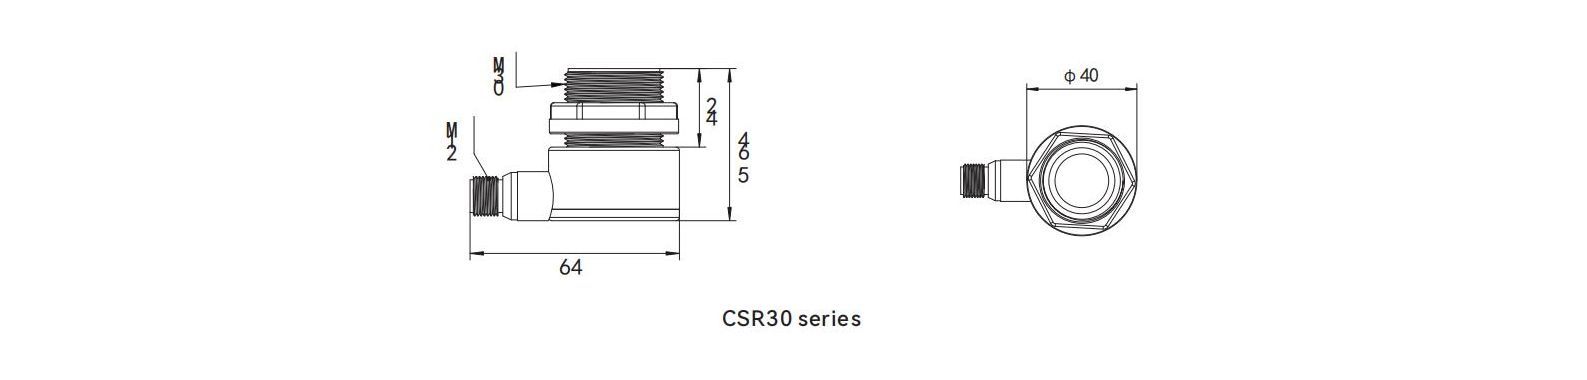 Dimensions of Ultrasonic sensors CSR30 series